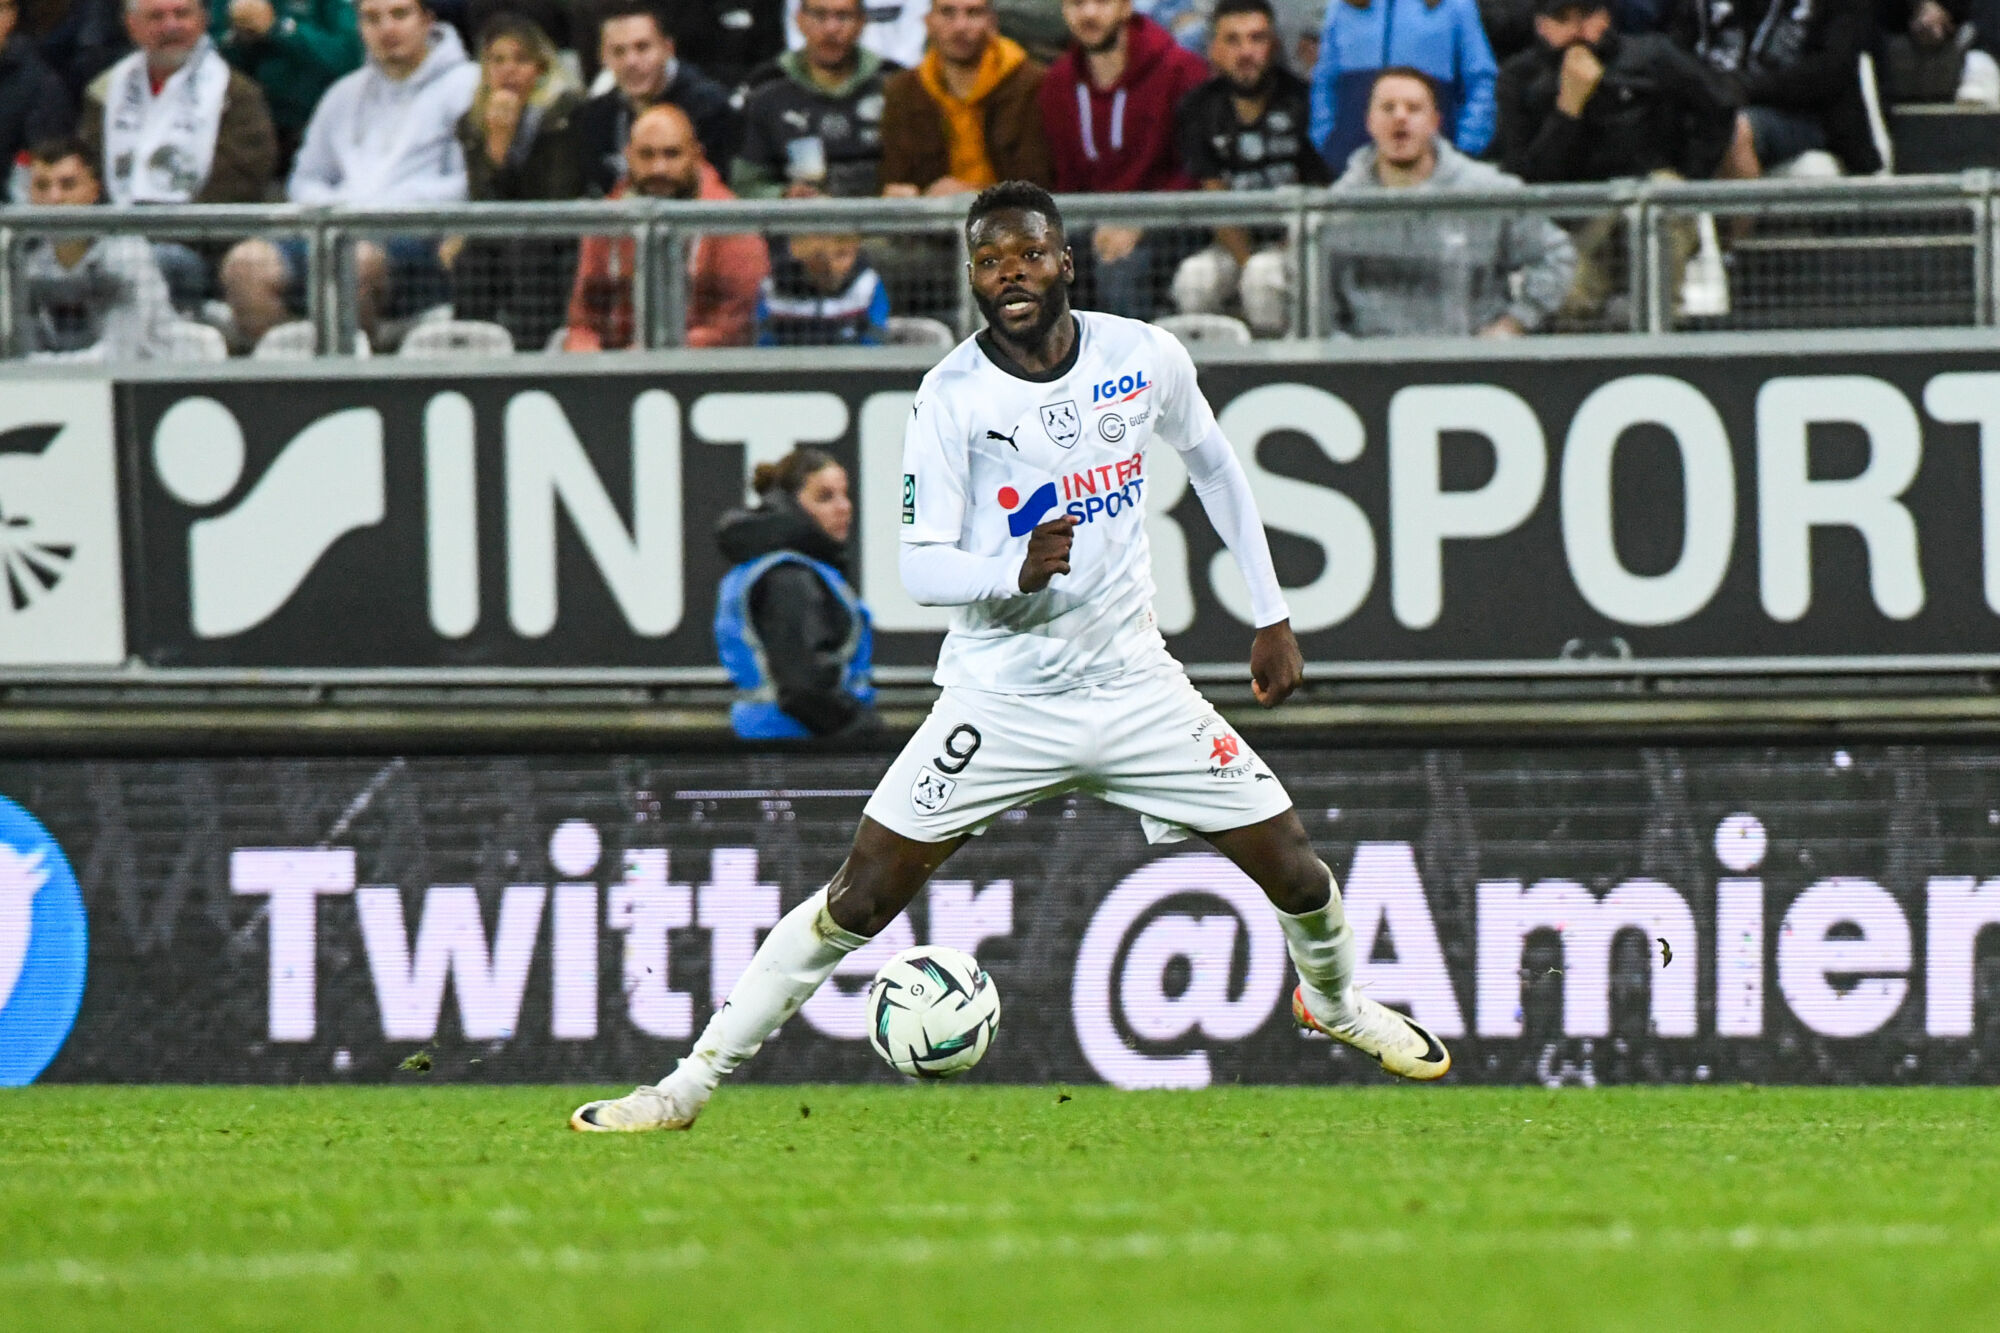 Louis Mafouta Amiens SC